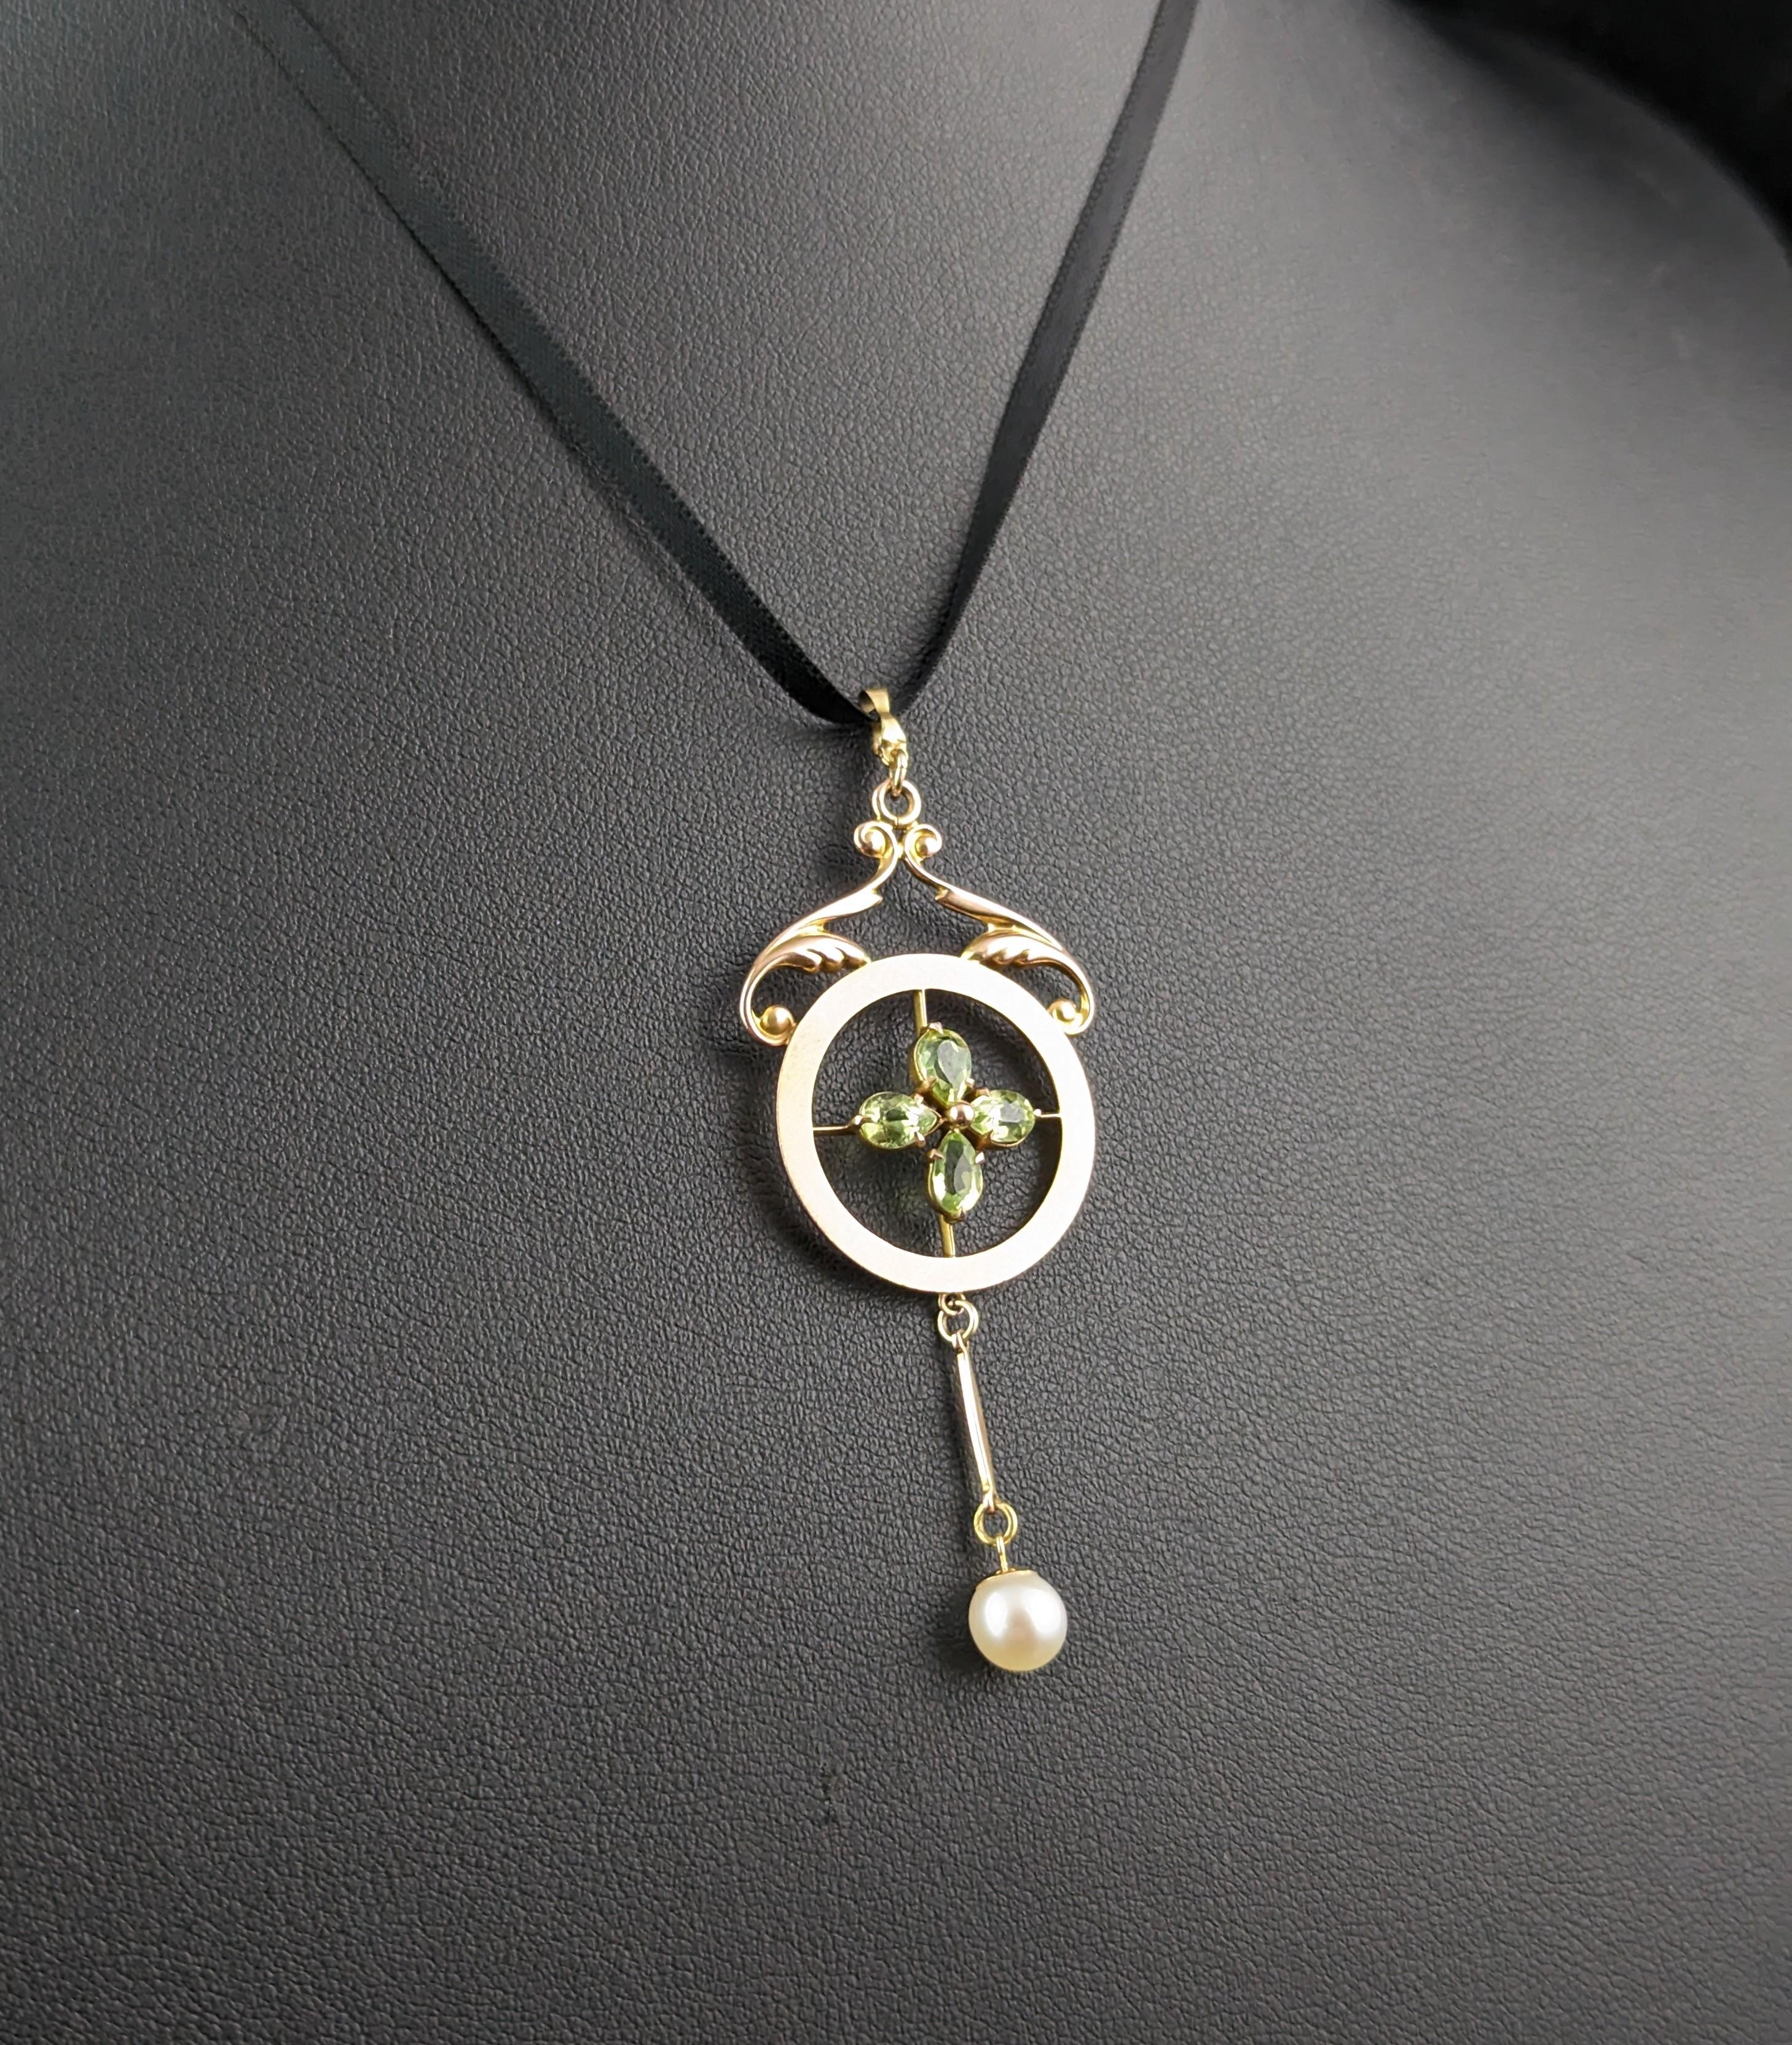 Antique Peridot and Pearl drop pendant, 9k gold, Art Nouveau  1